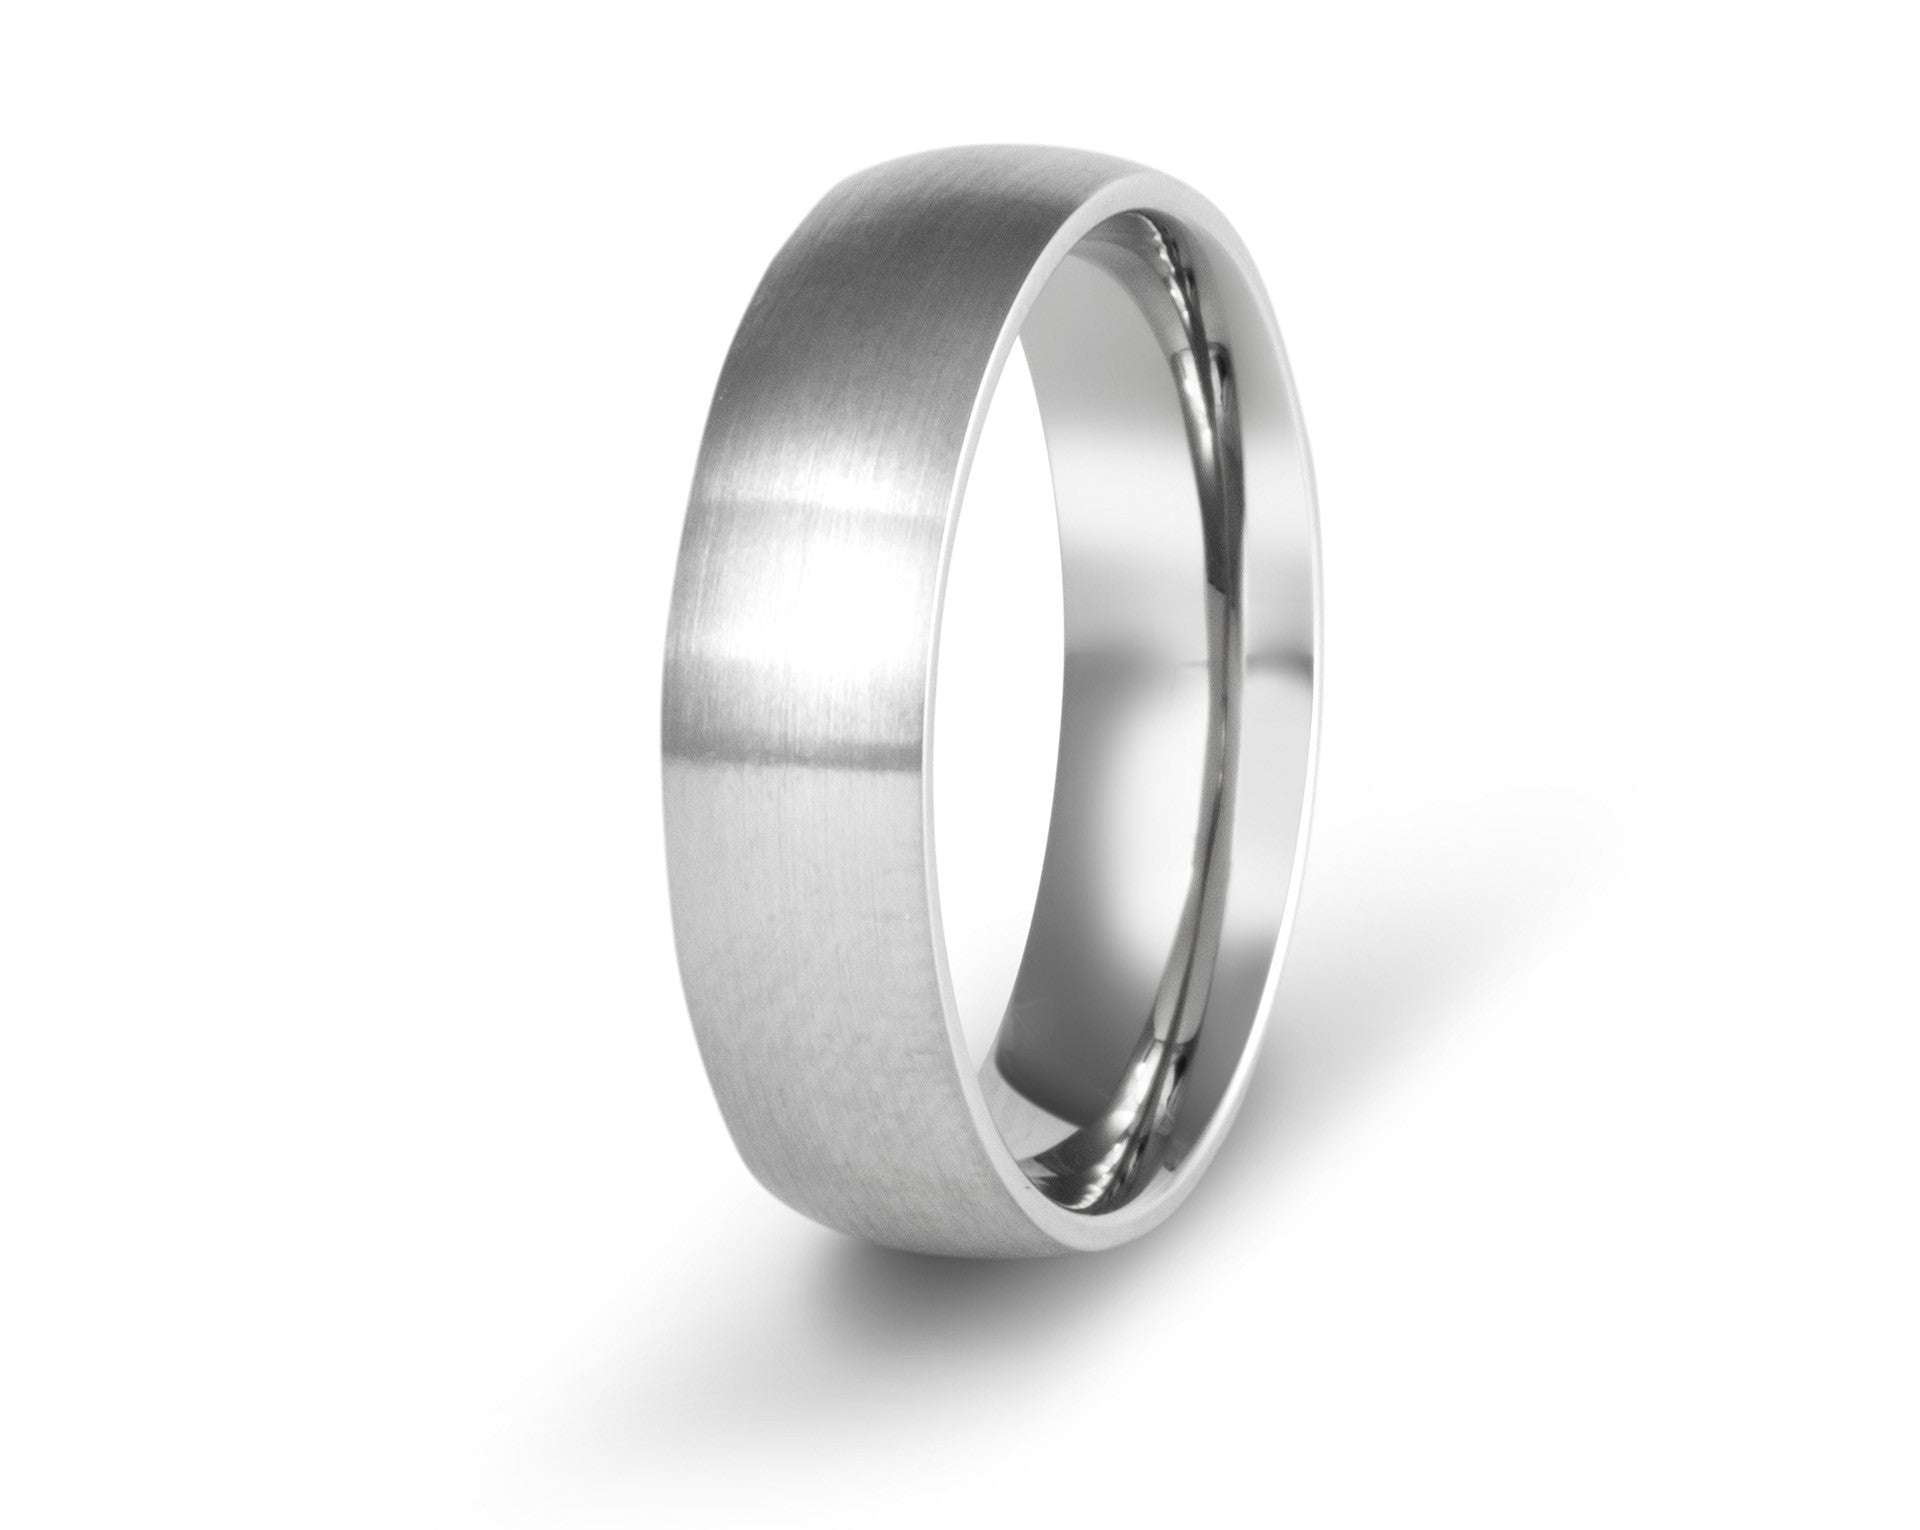 The Sullivan Stainless Steel Ring Rings 